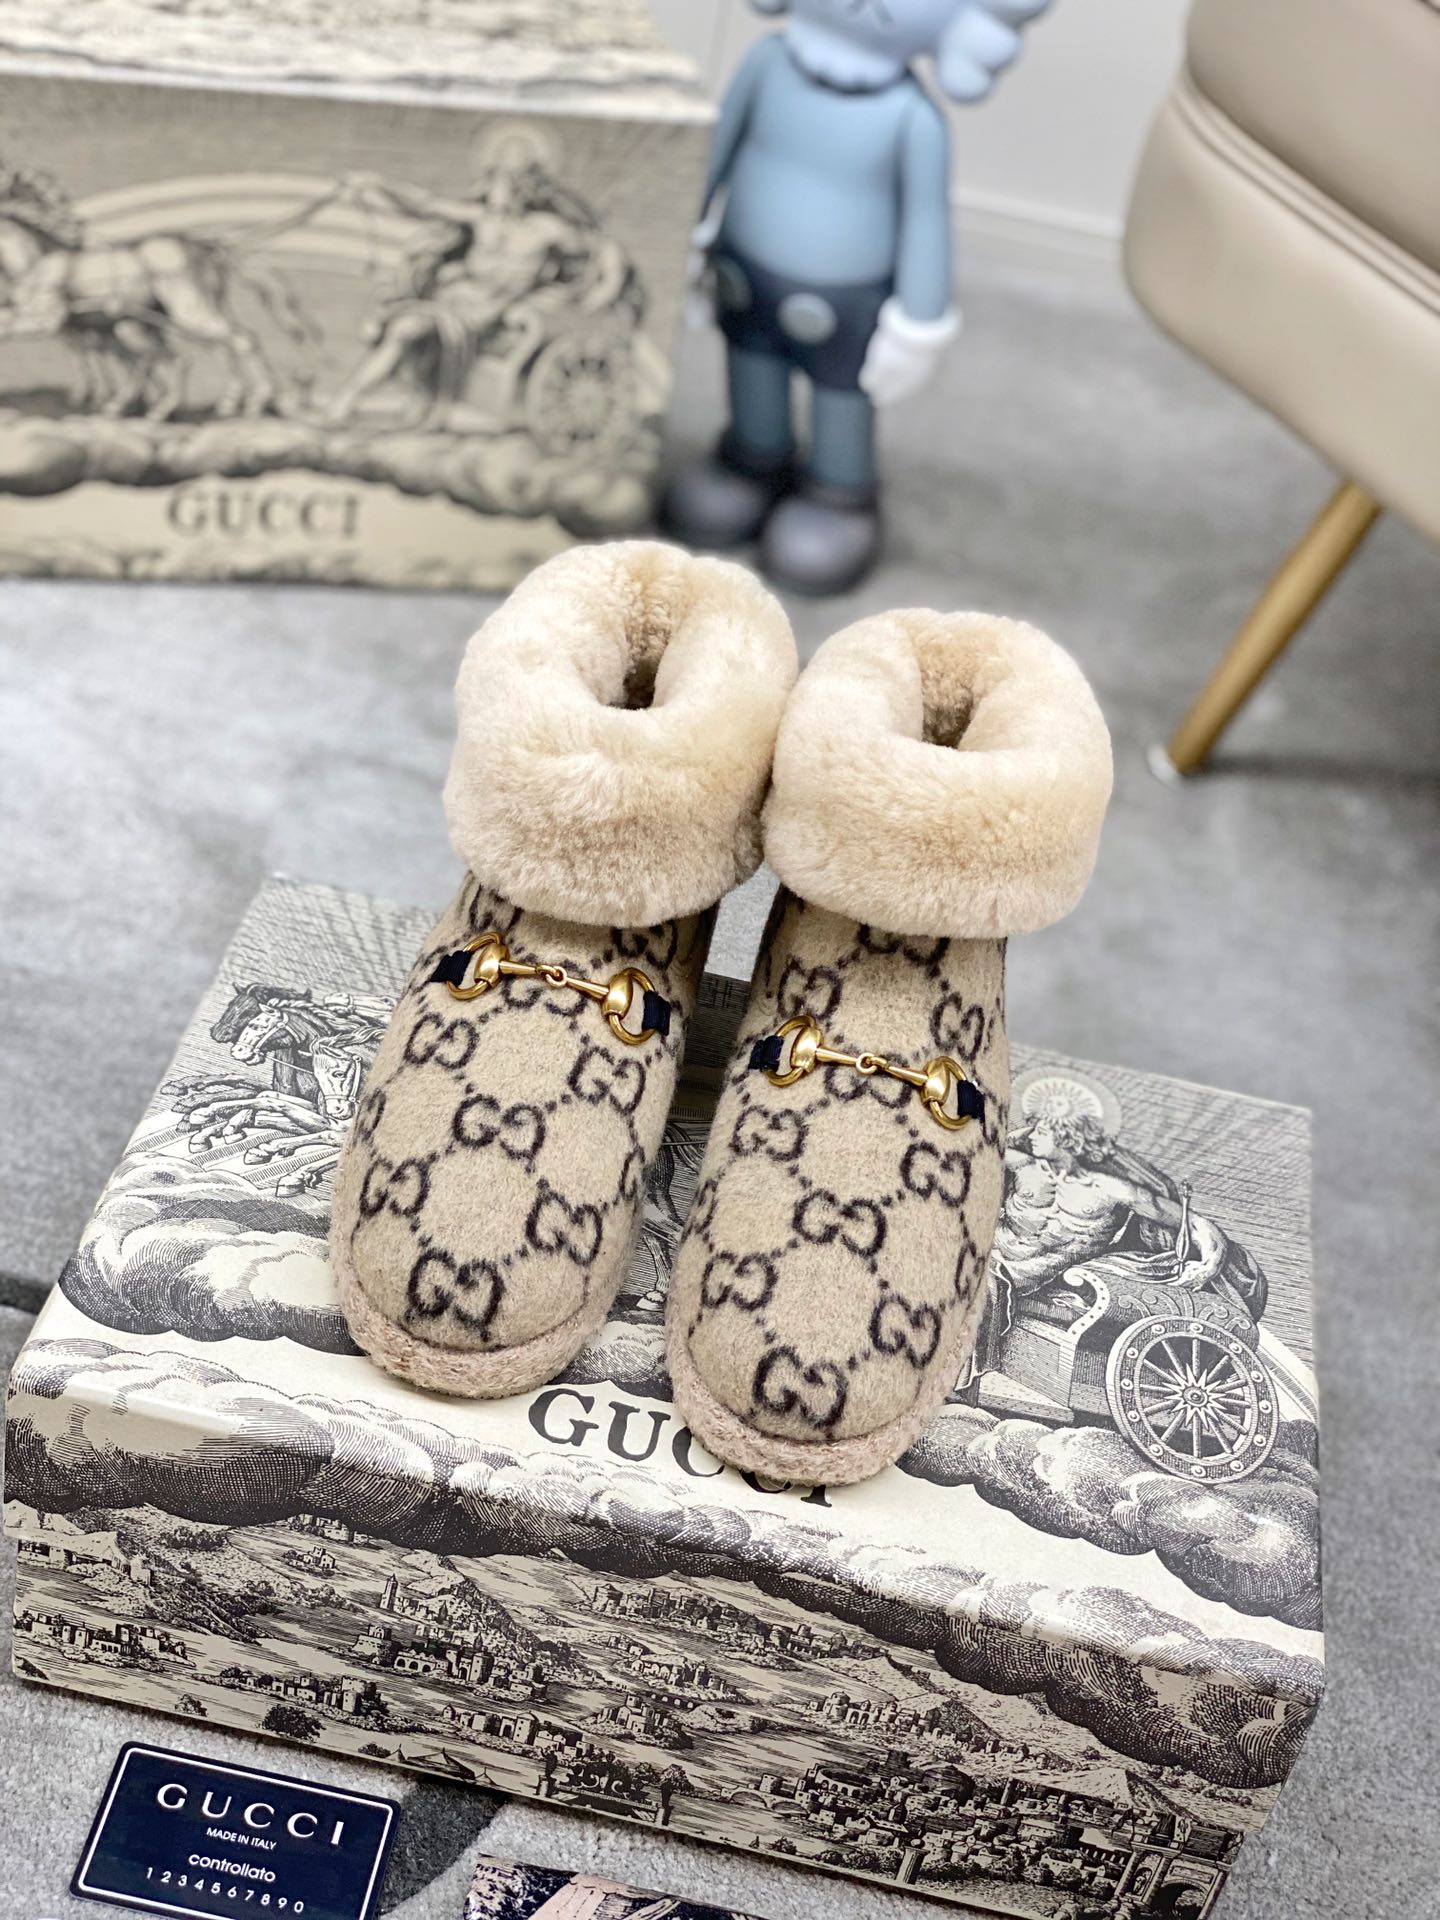 Gucci Boot jacquard espadrille in Cream